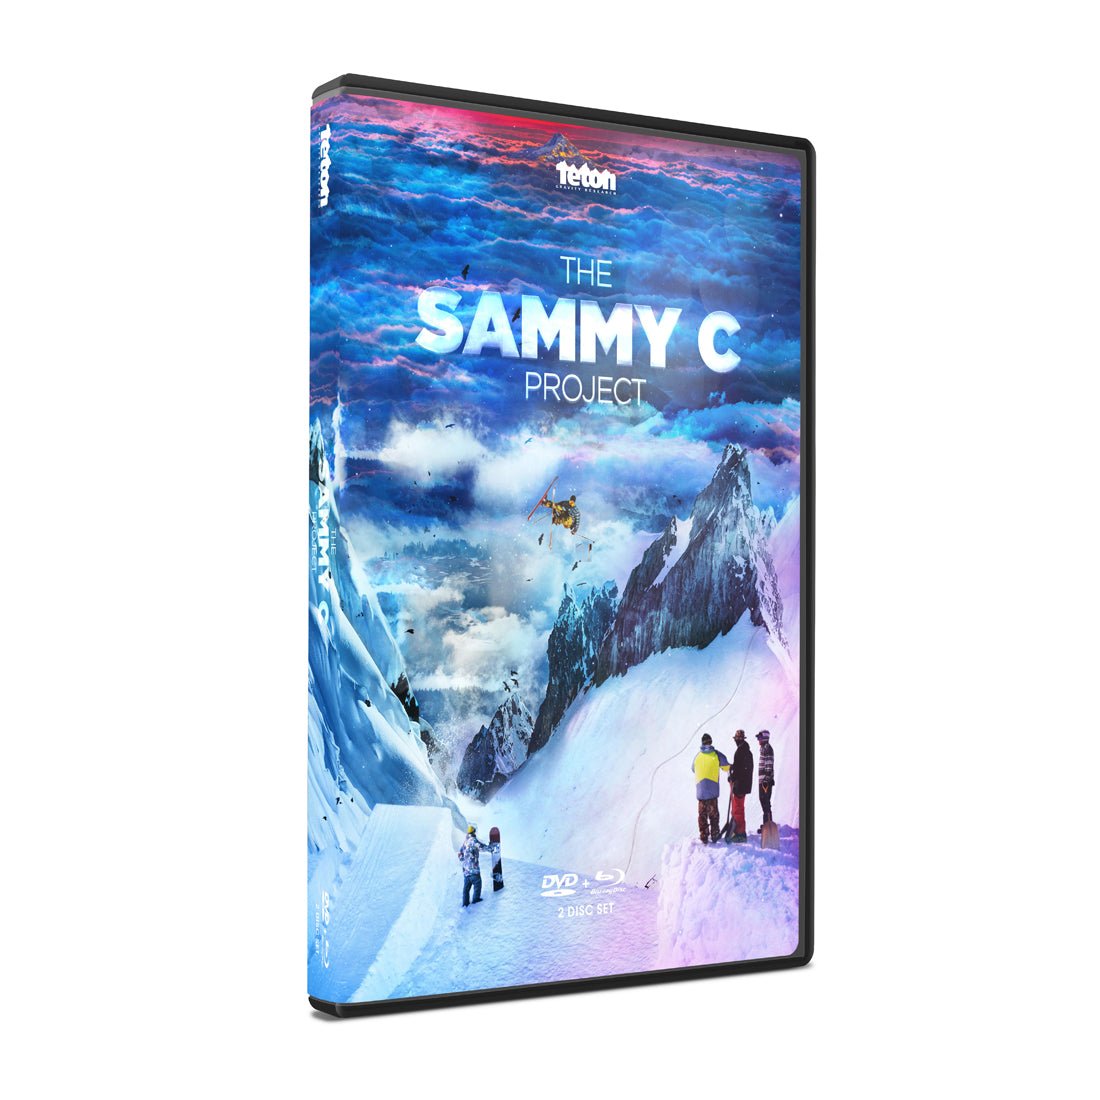 The Sammy C Project DVD/Blu-Ray Combo Pack - Teton Gravity Research